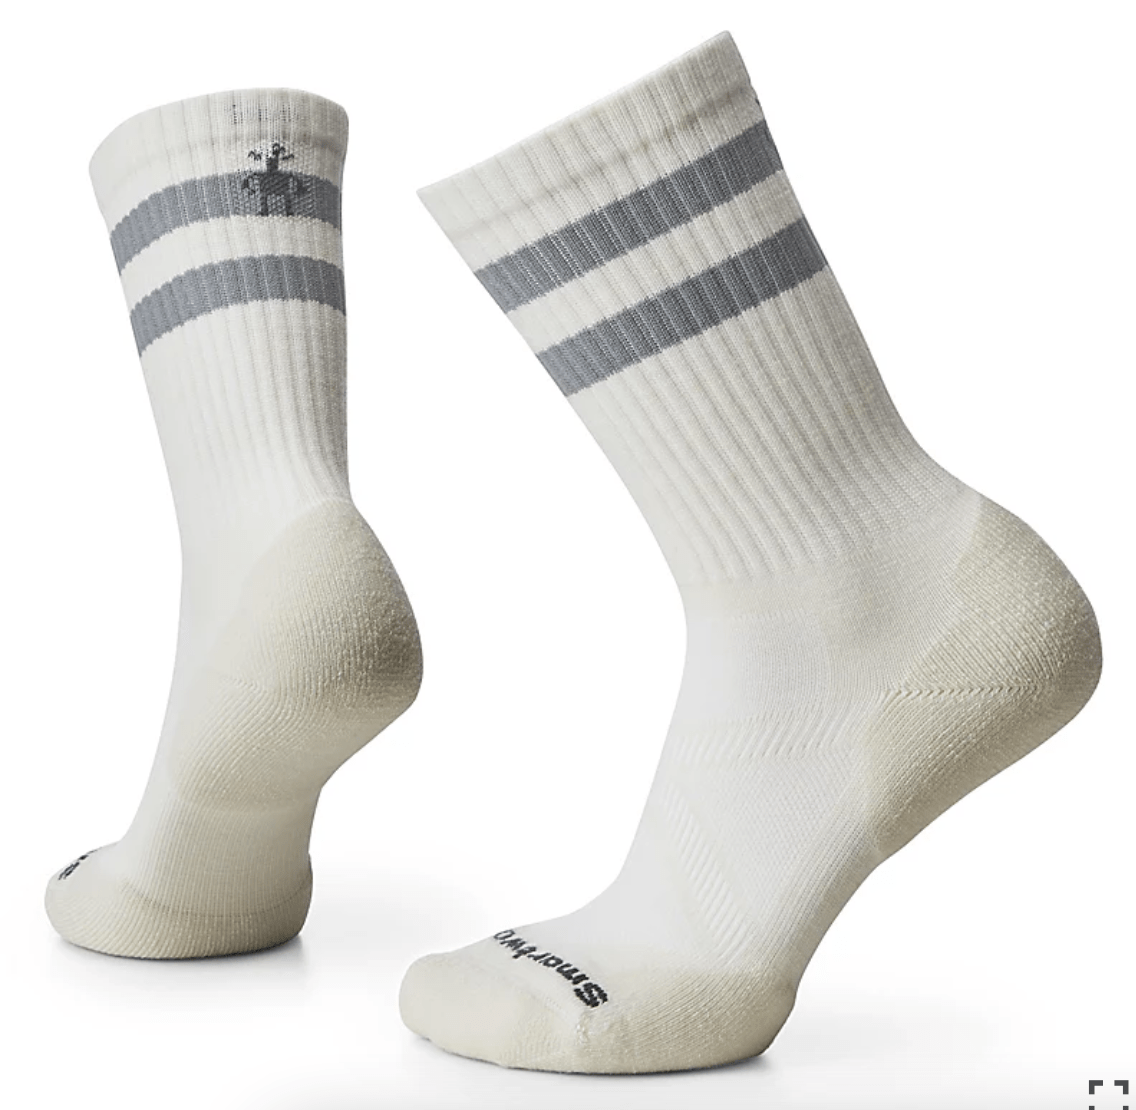 Smartwool Socks 38-41 EU / Natural Smartwool Athletic Stripe Targeted Cushion Crew Socks